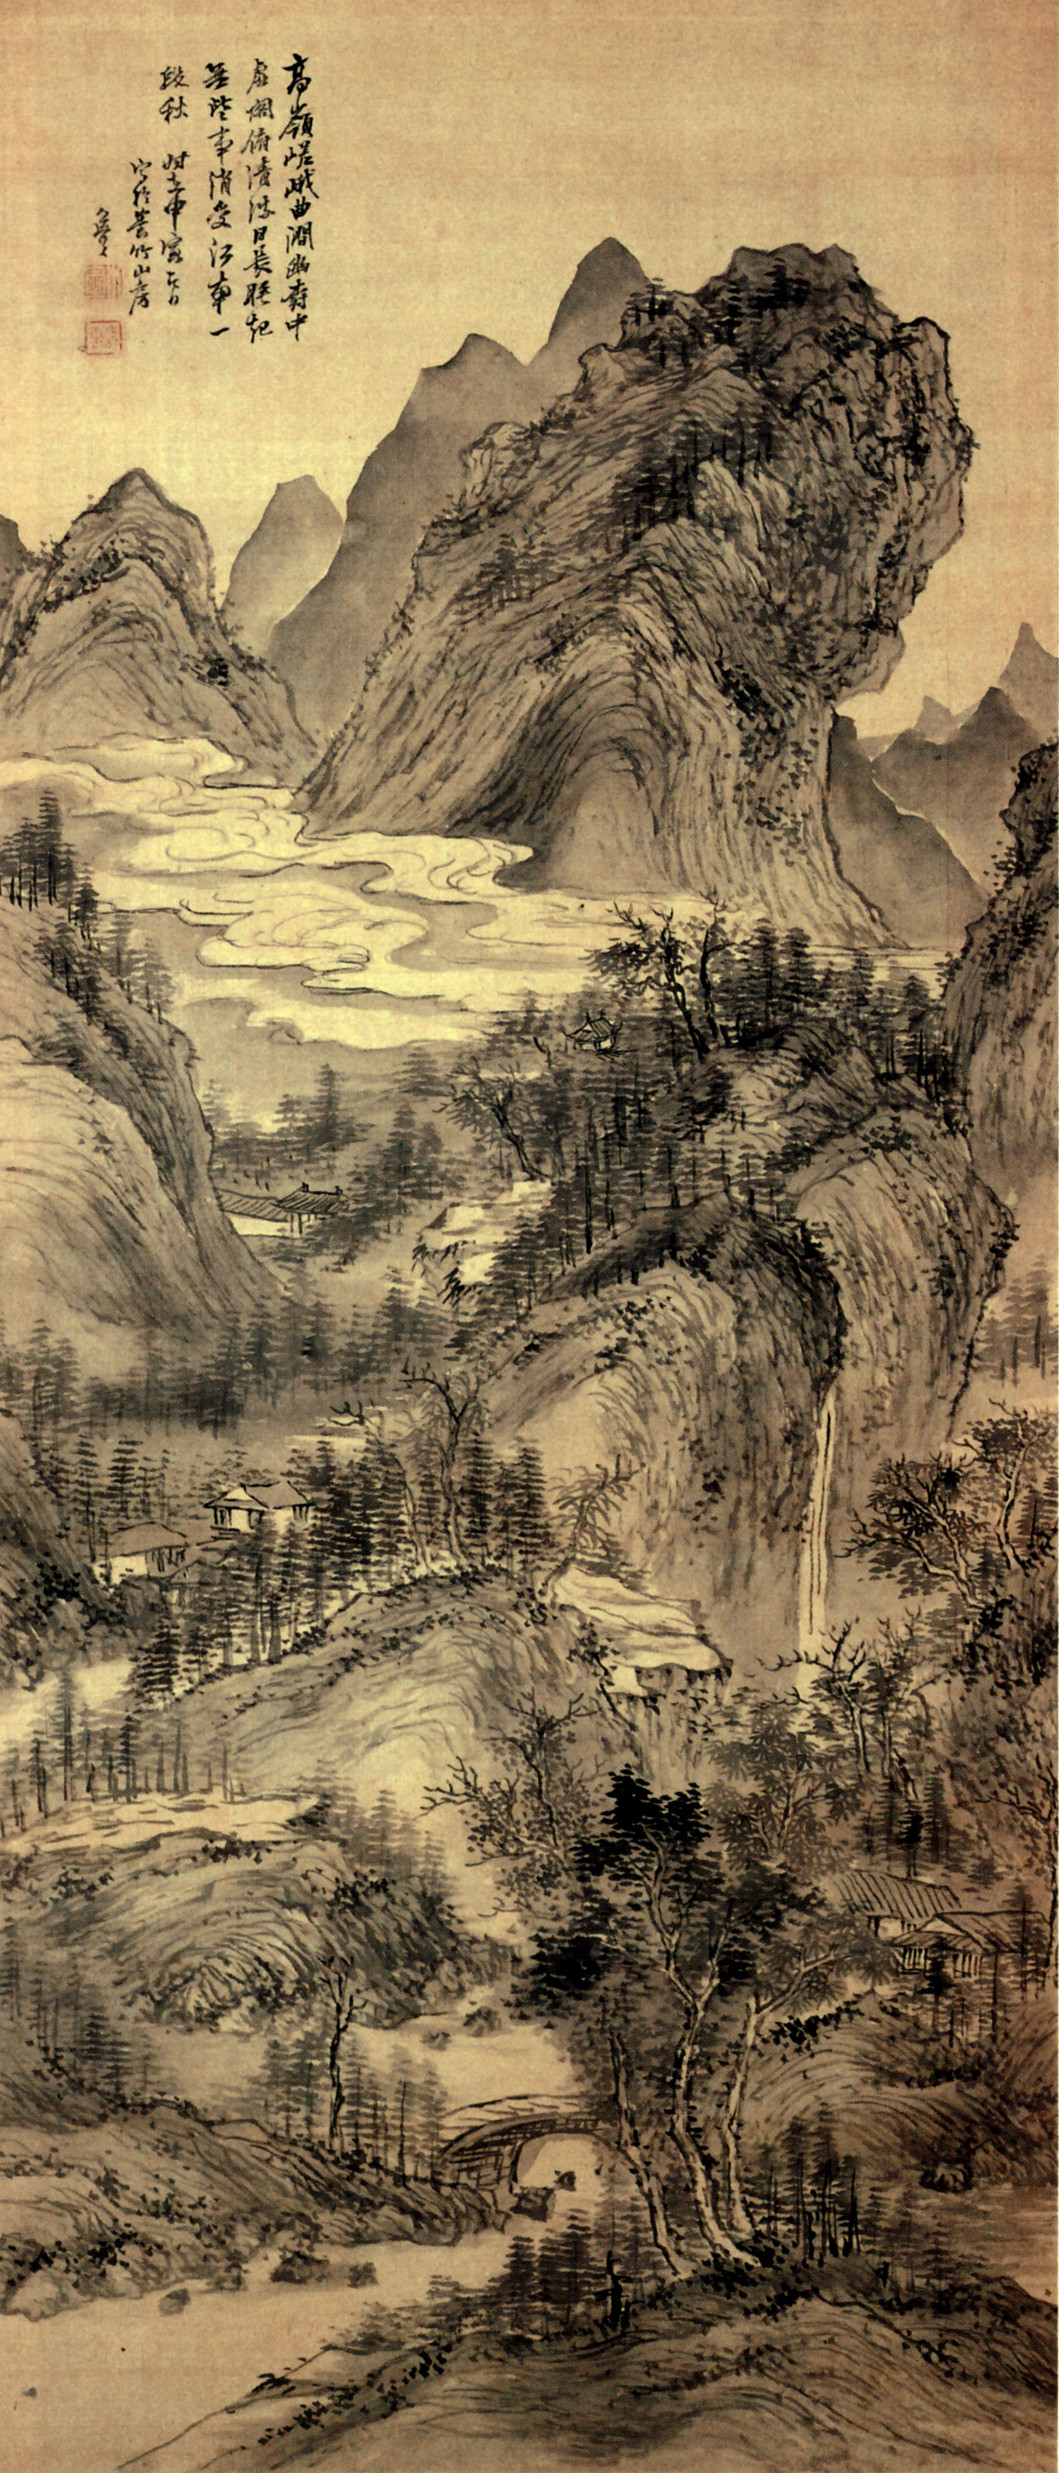 Japanese Landscape Painting
 THE NINJA IN JAPANESE ART